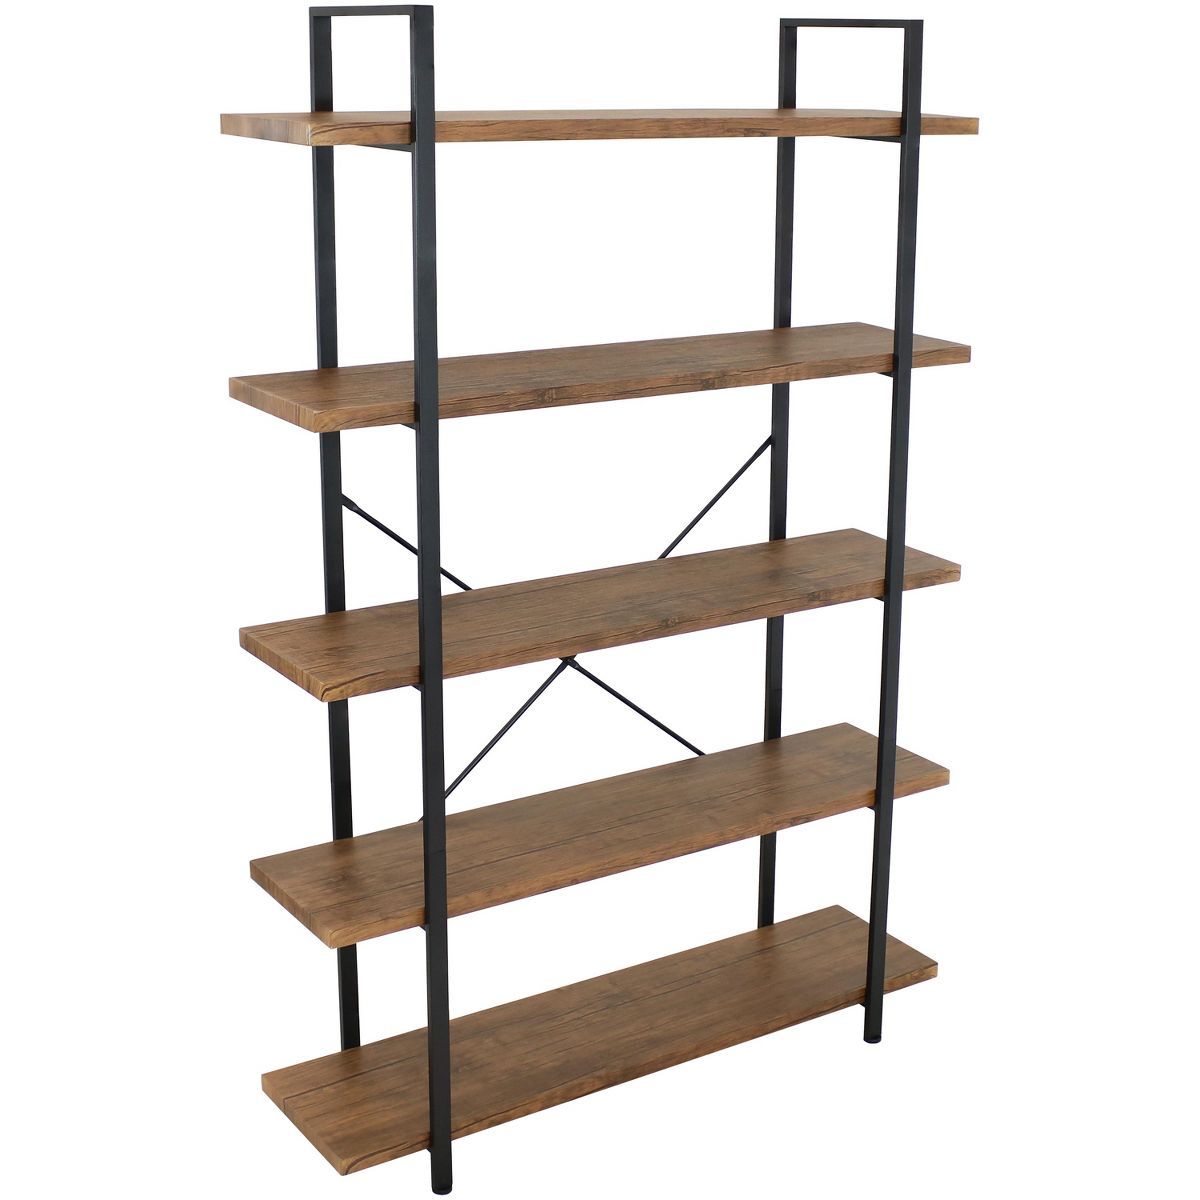 Sunnydaze 5 Shelf Industrial Style Freestanding Etagere Bookshelf with Wood Veneer Shelves | Target